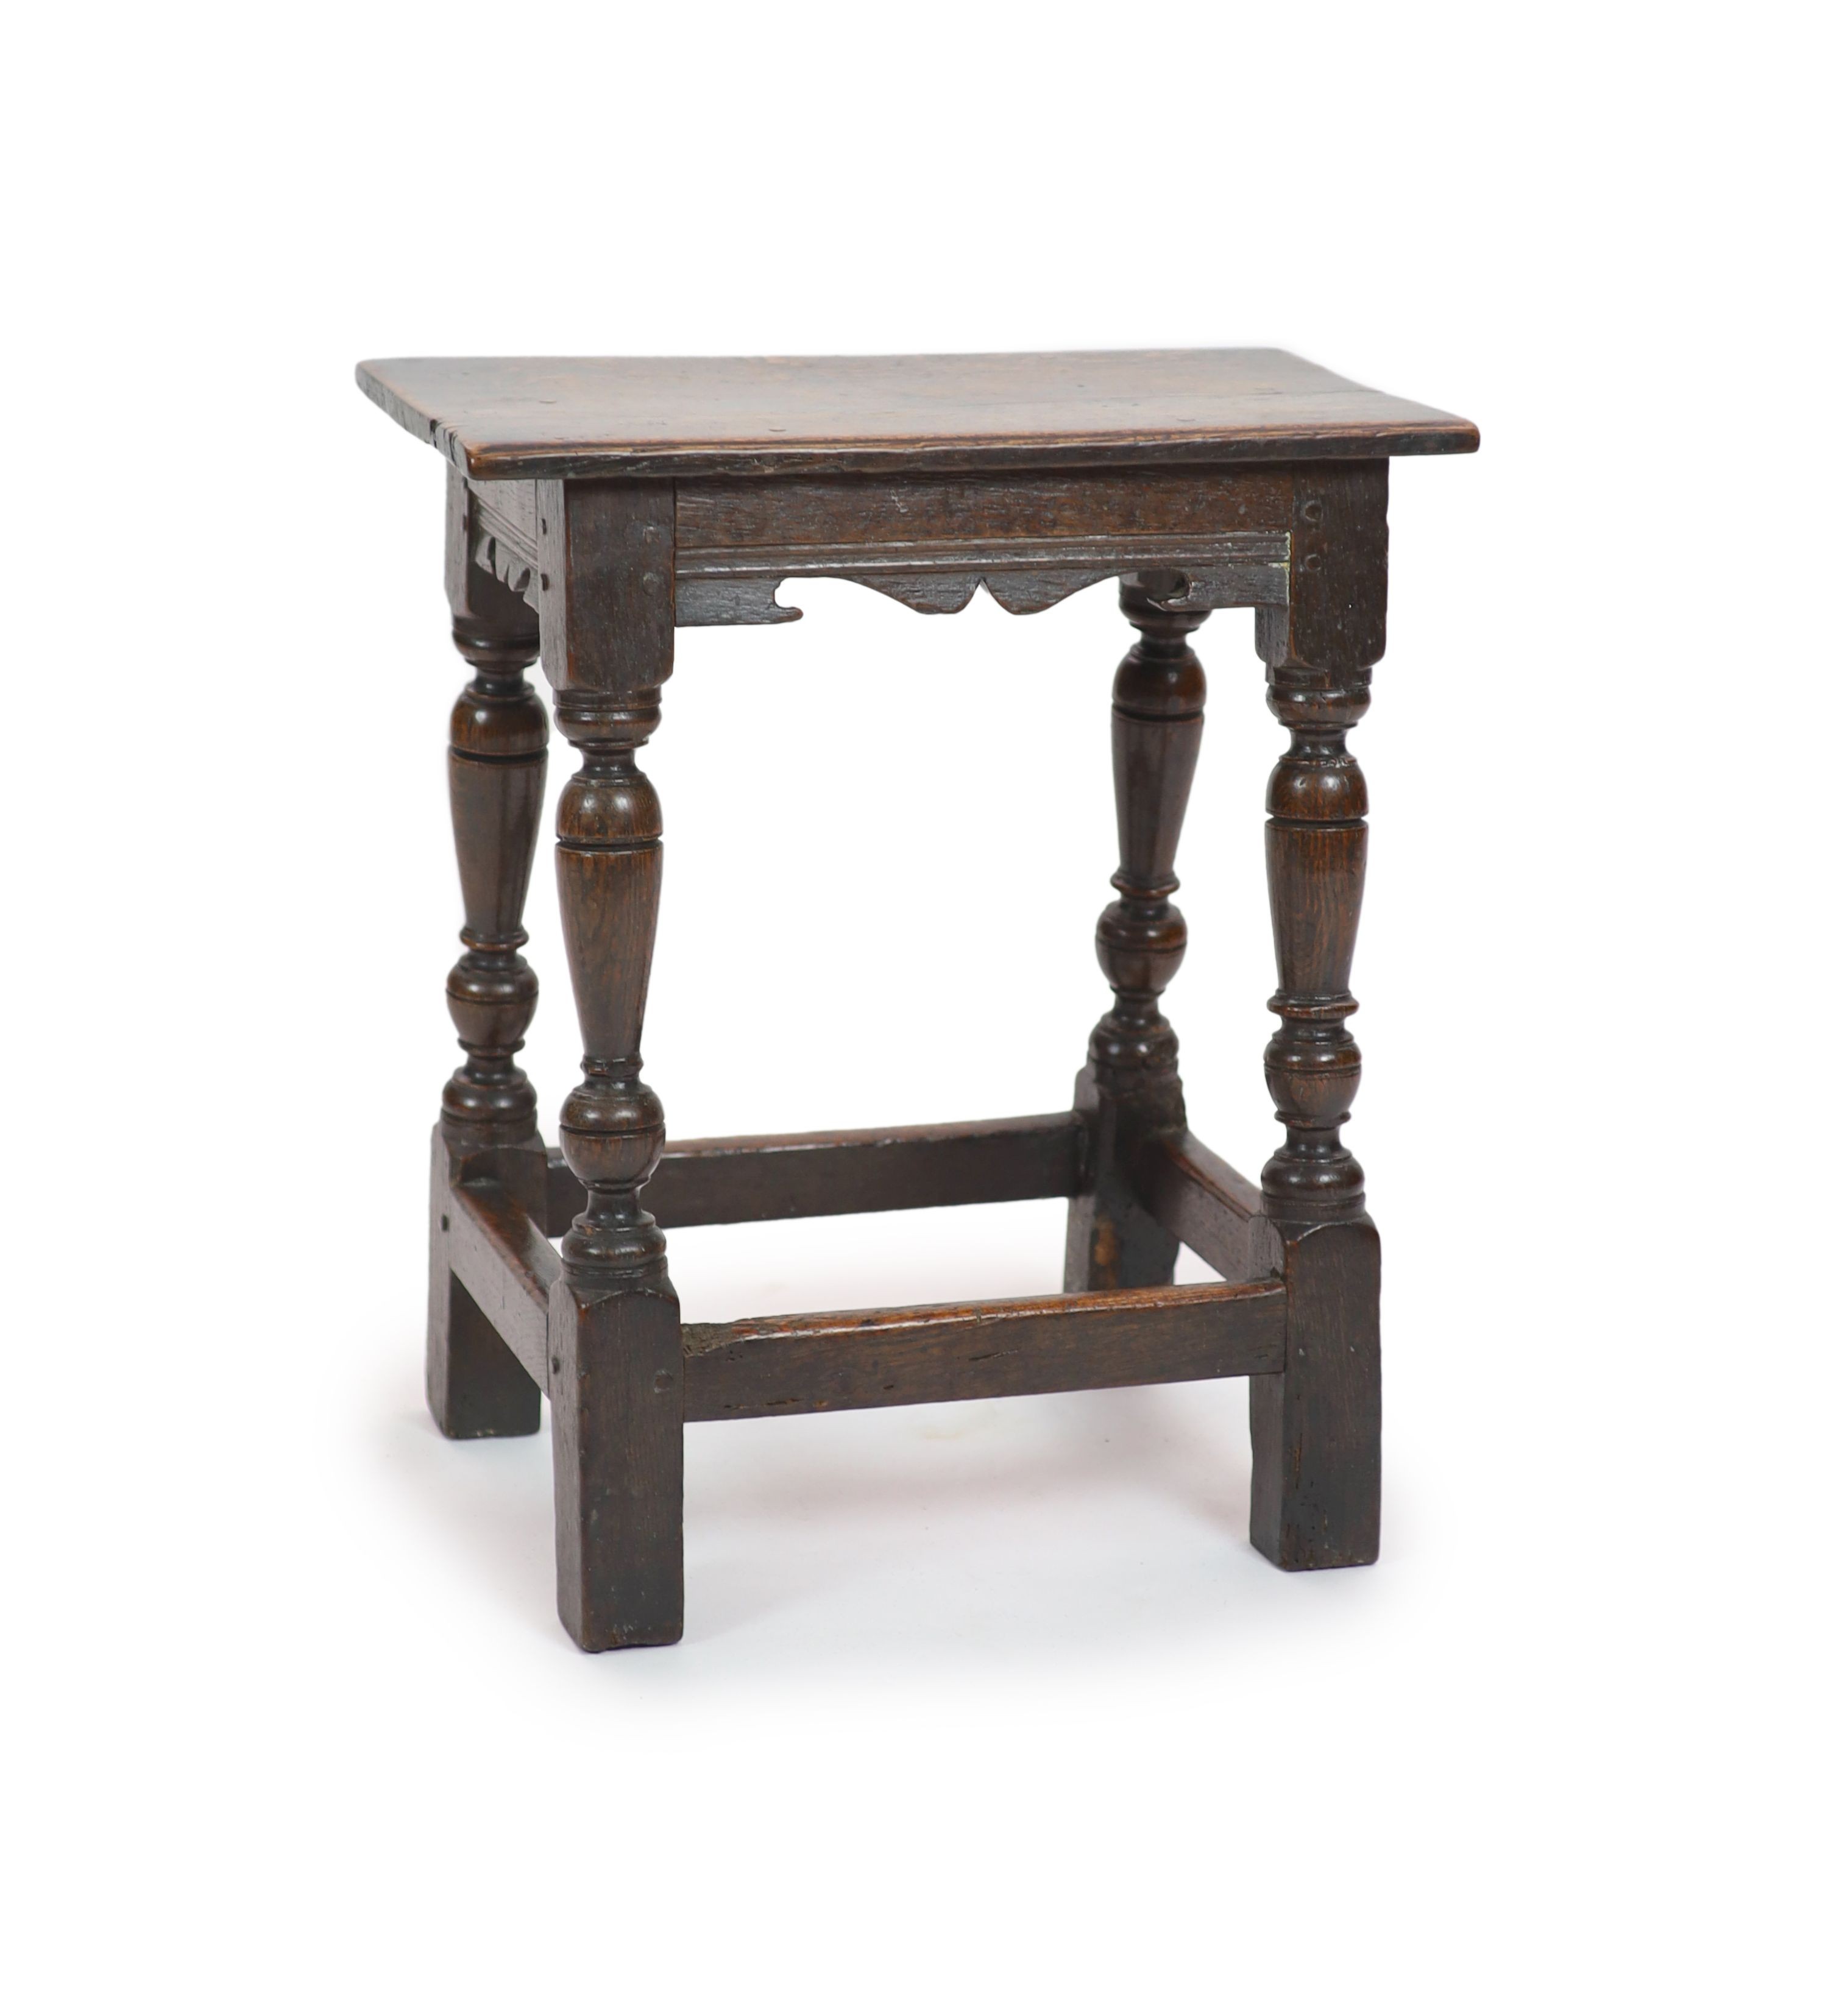 A Charles I oak joint stool, H 54cm. W 48cm. D 27cm.